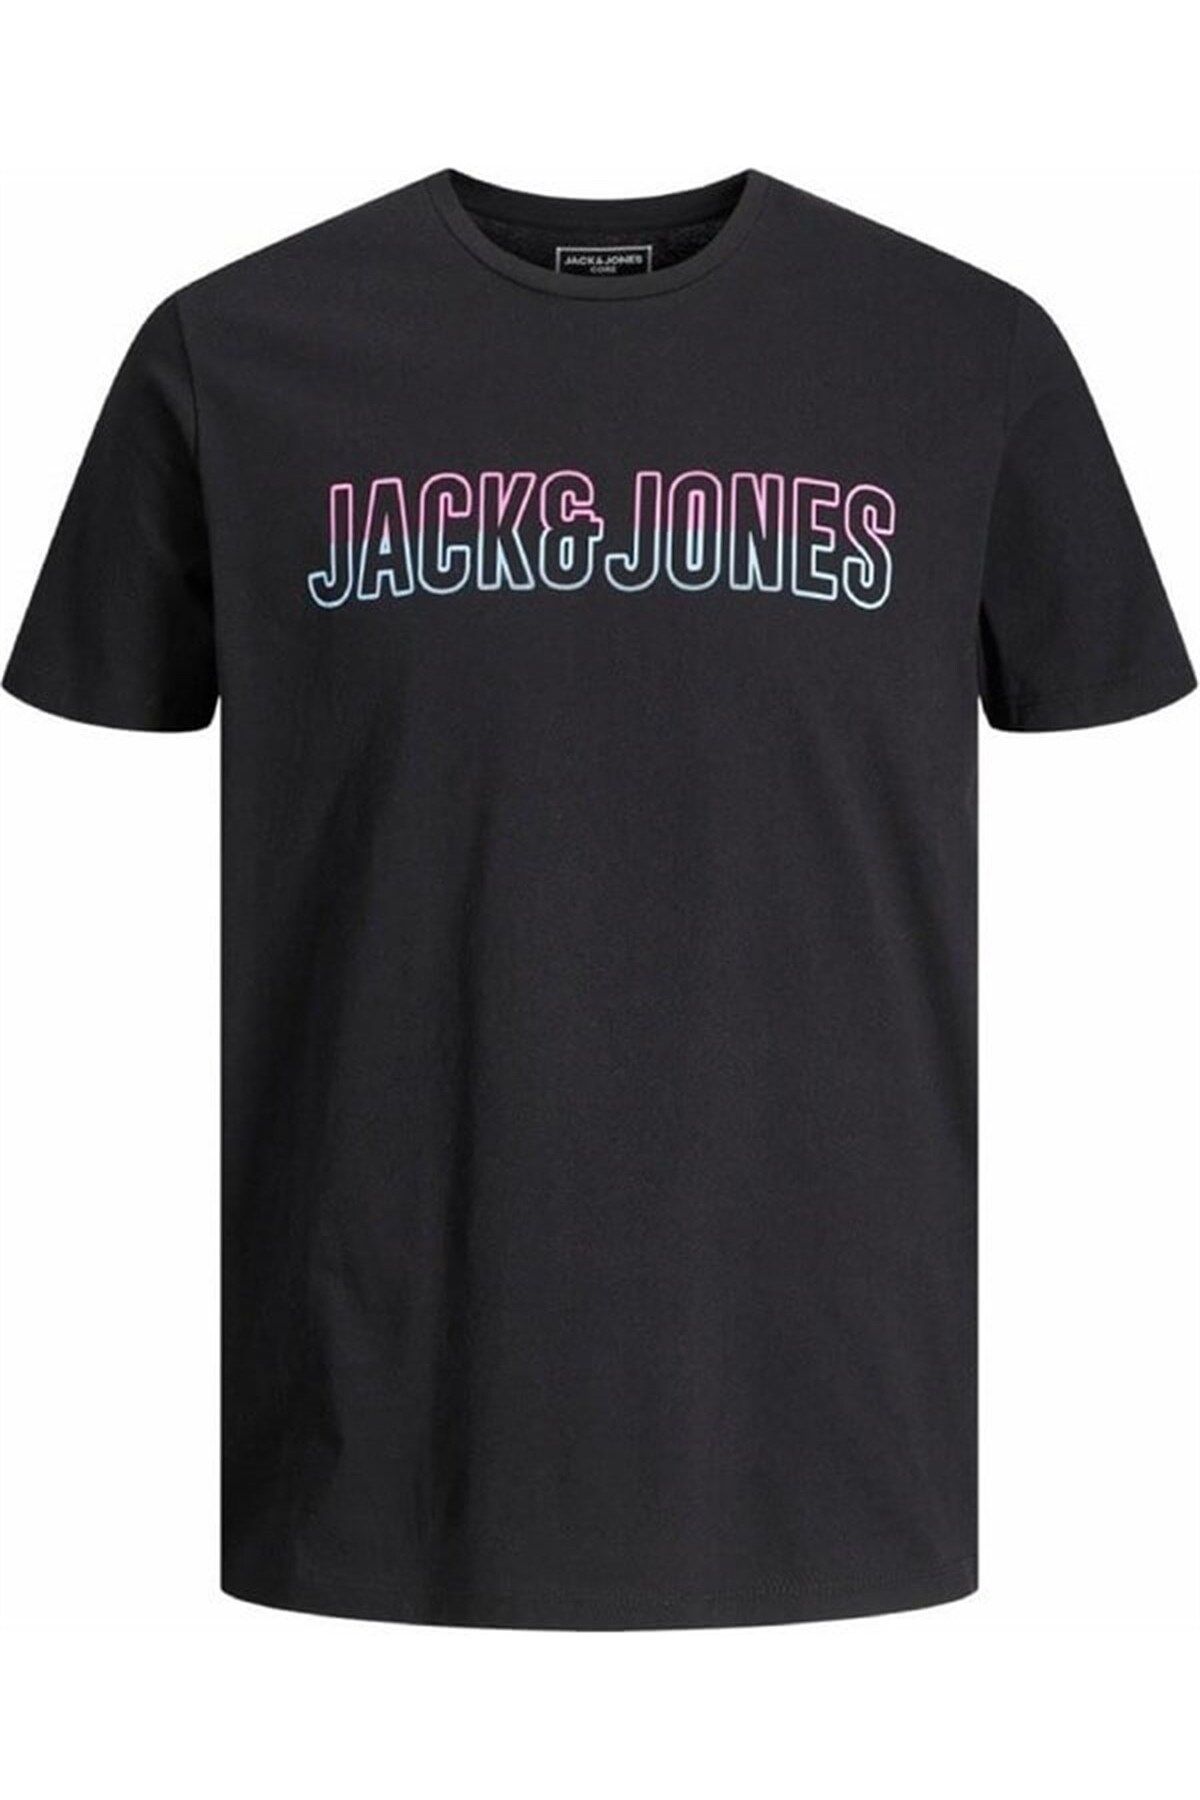 Jack & Jones Jack&jones Jcoraın Tee Ss Crew Neck Erkek T-shirt-12201248